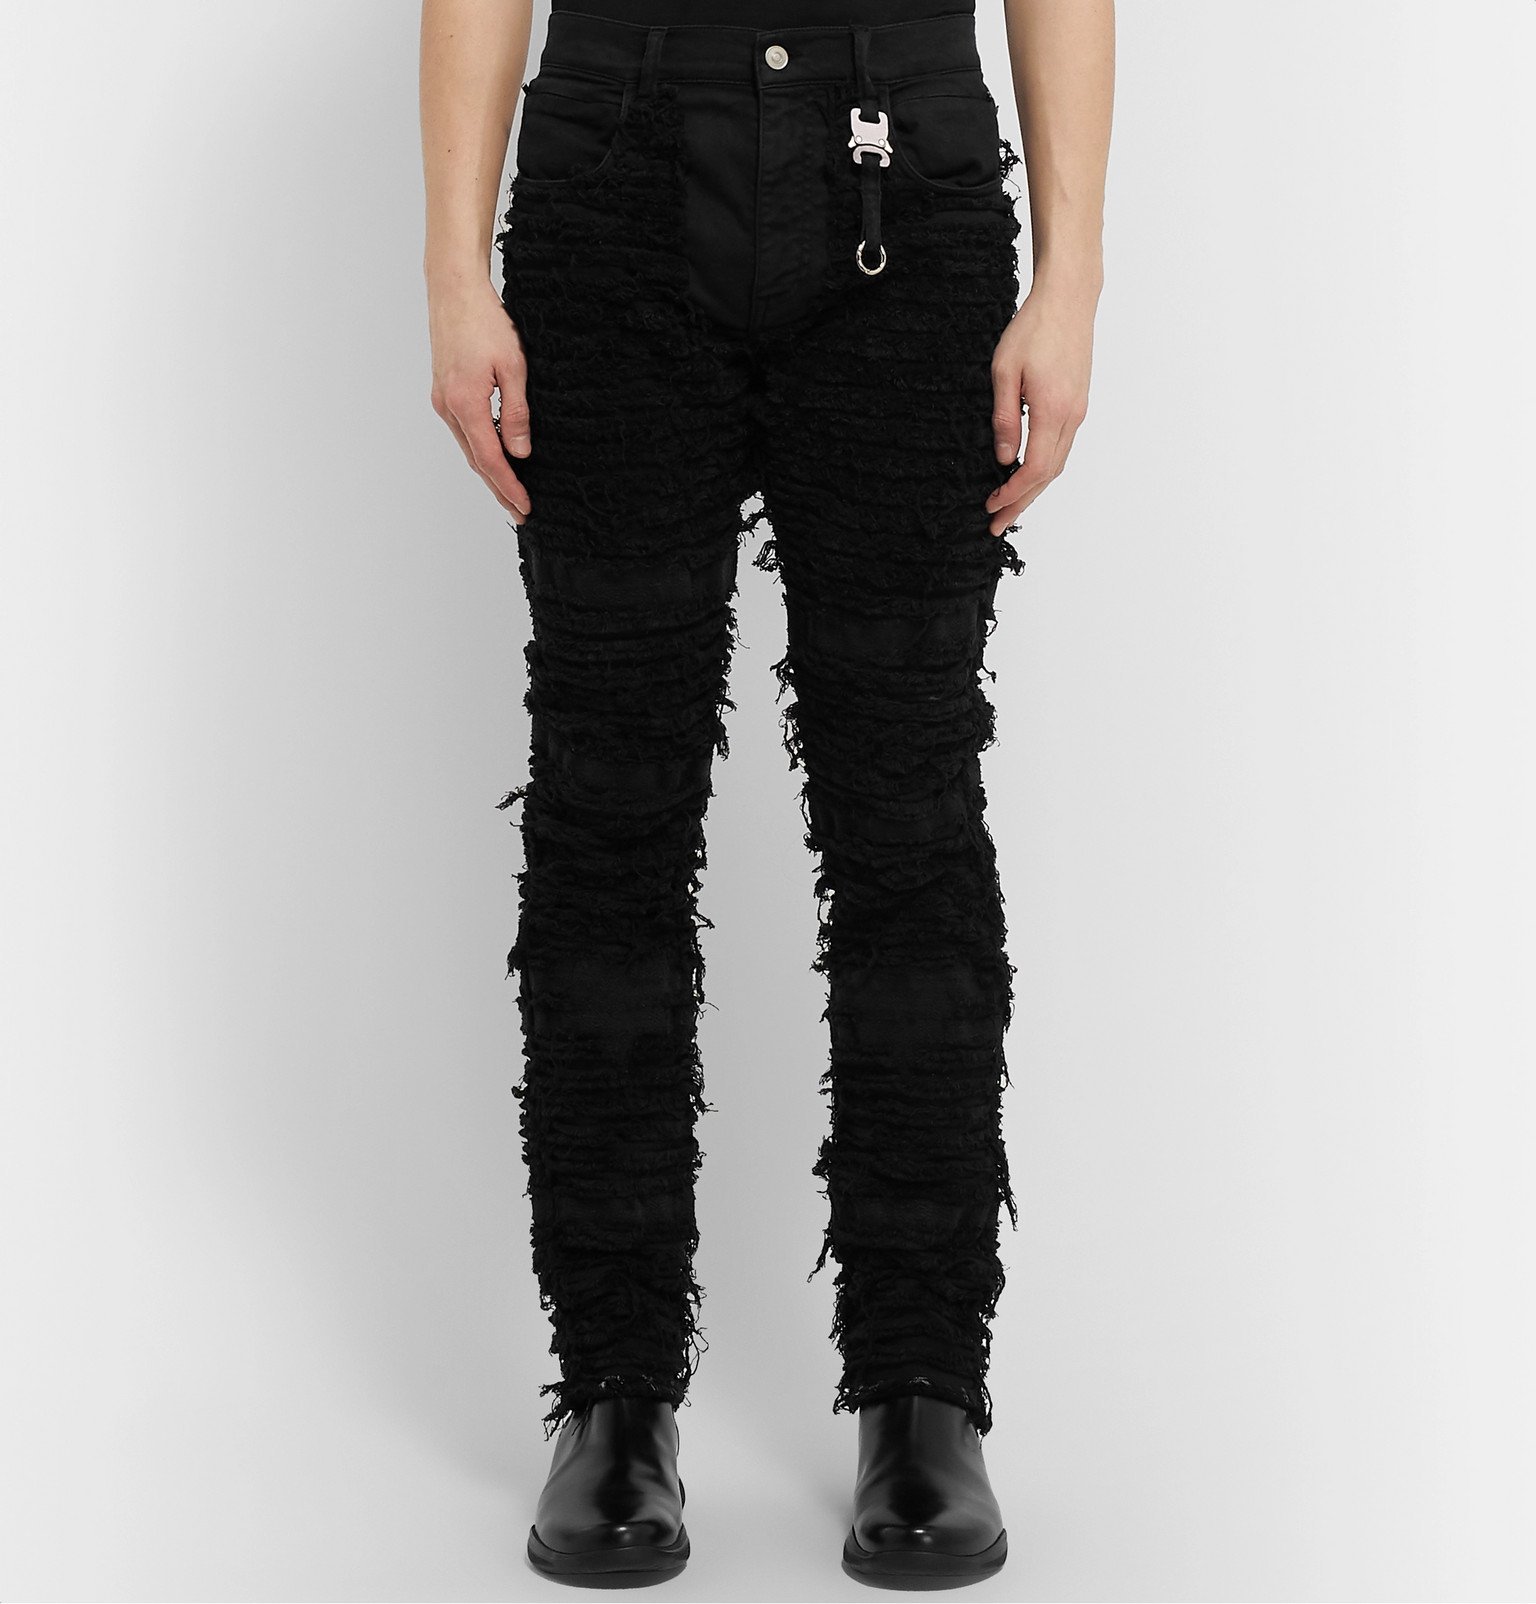 1017 ALYX 9SM - Blackmeans Distressed Denim Jeans - Black 1017 ALYX 9SM